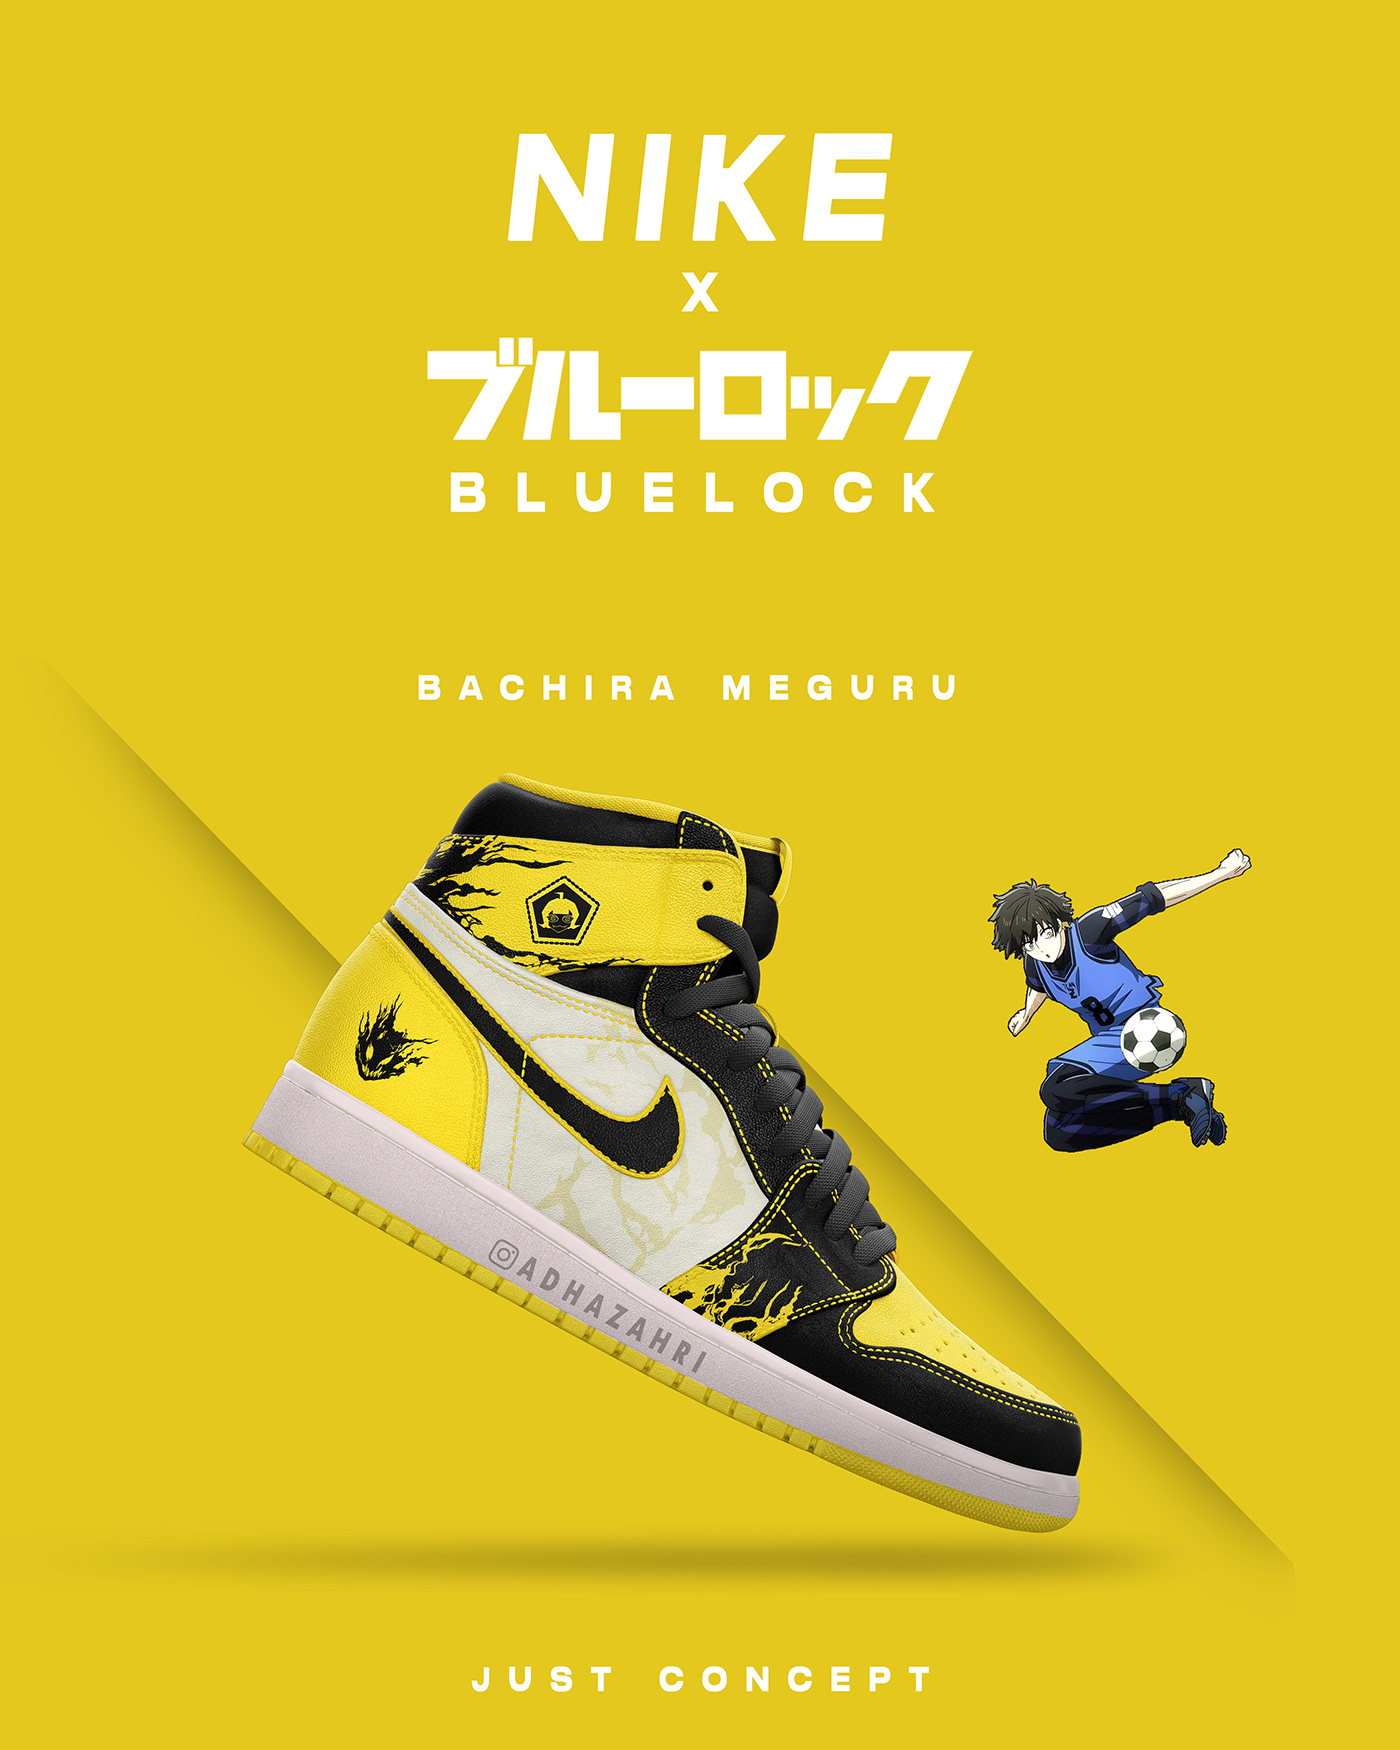 airjordan1 anime bluelock bluelockshoe bluelockxnike Nike nikexbluelock shoes sneakers snimesneakers